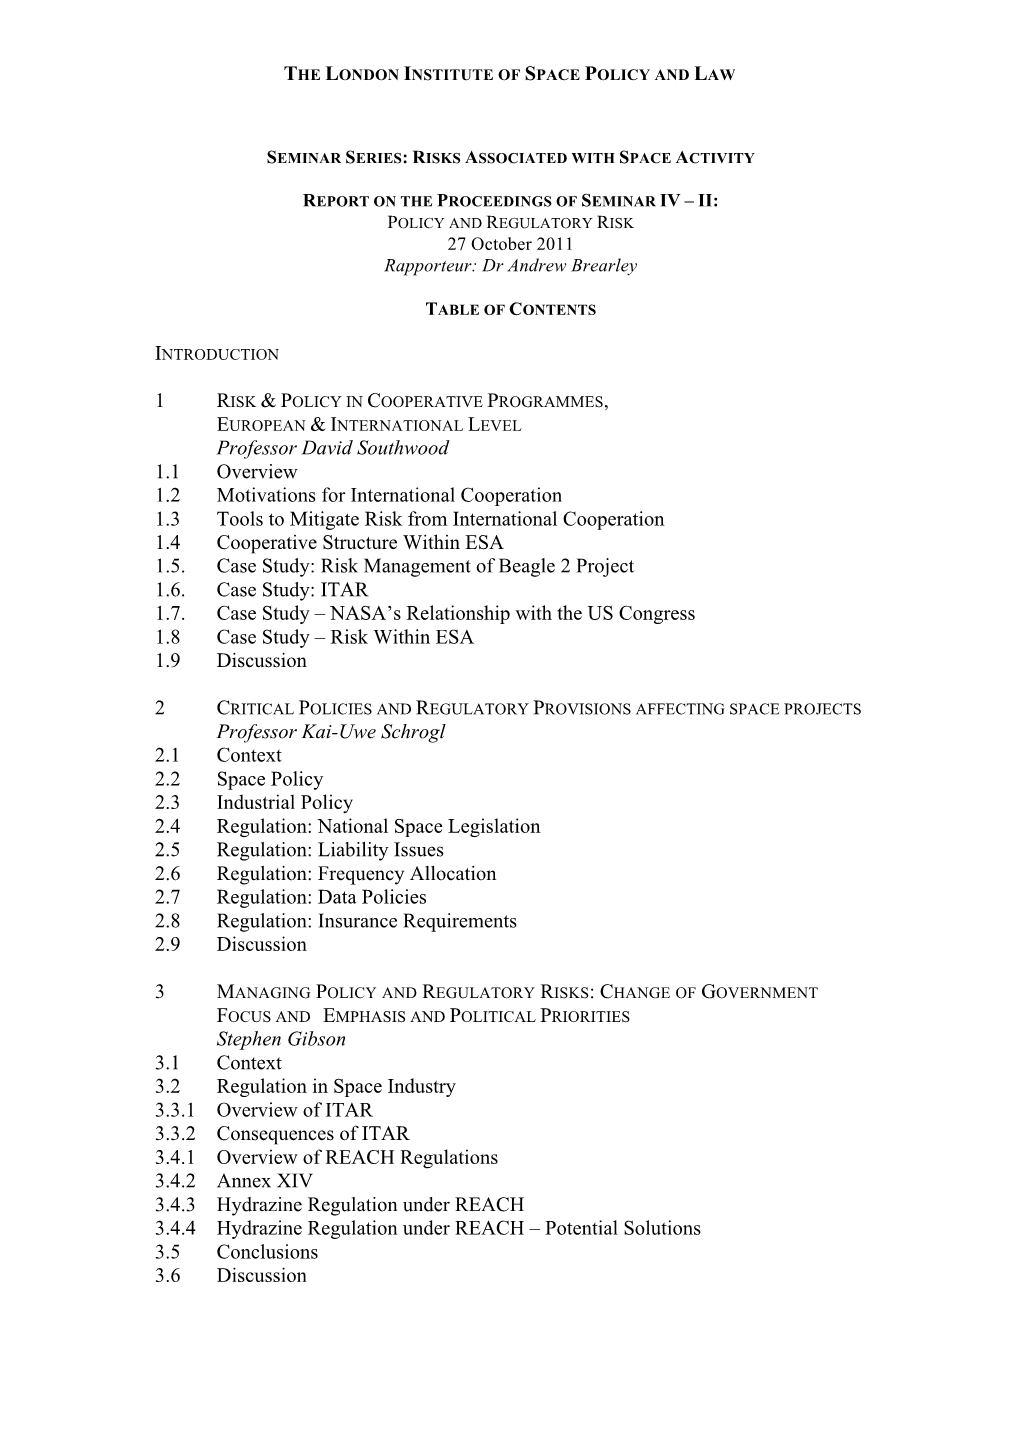 Proceedings of the Seminar